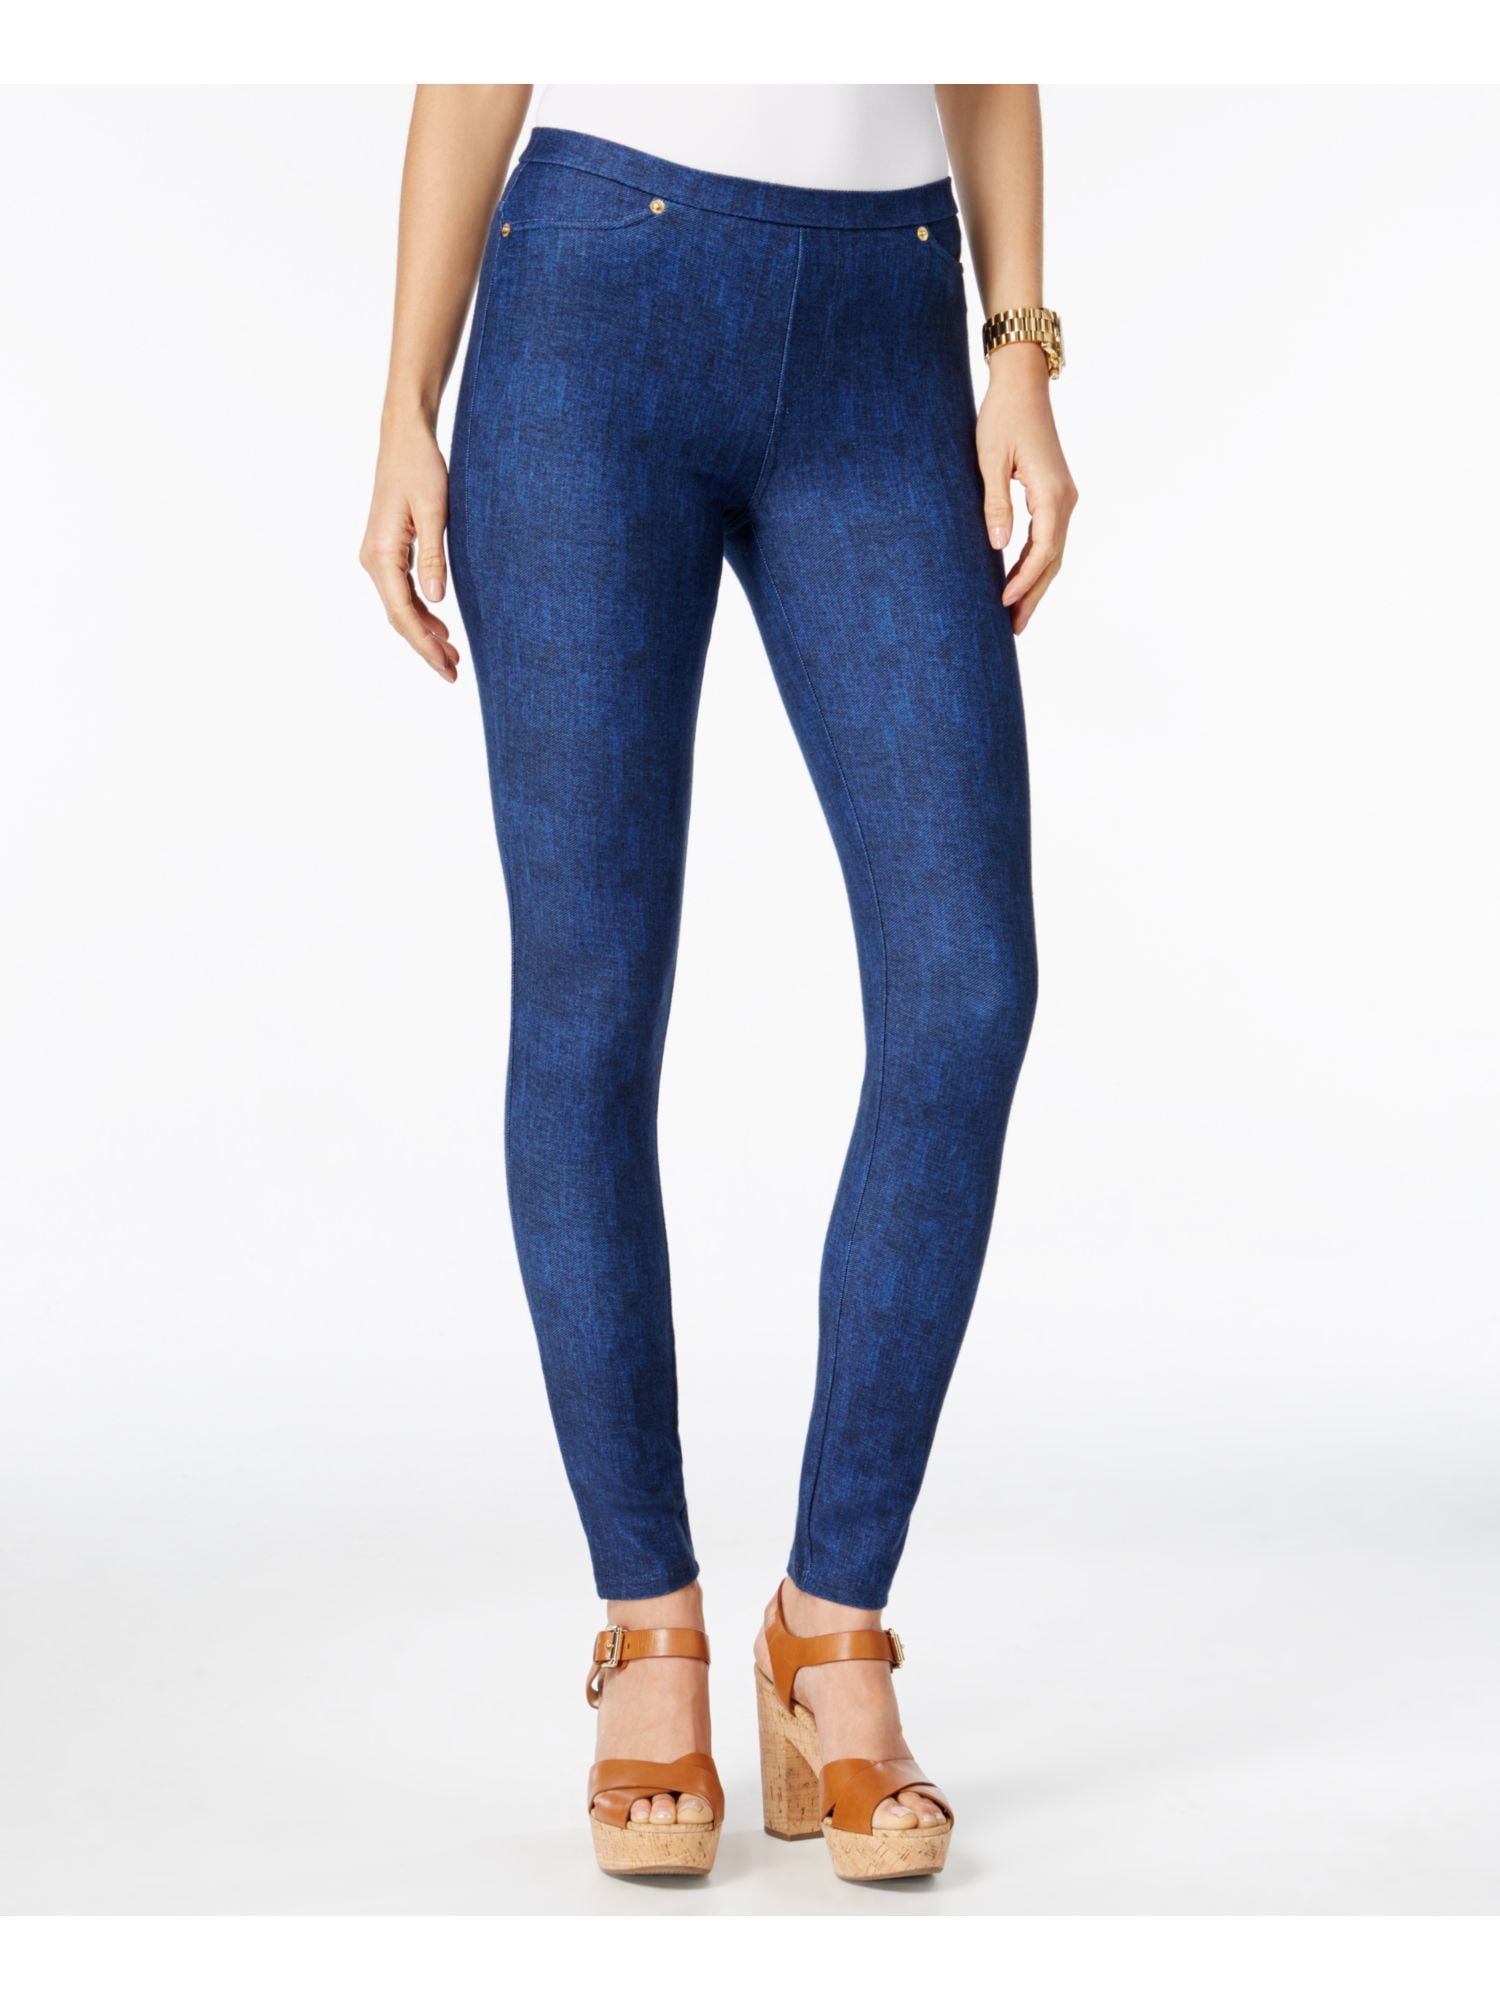 MICHAEL KORS Womens Blue Printed Skinny Leggings Size: S 